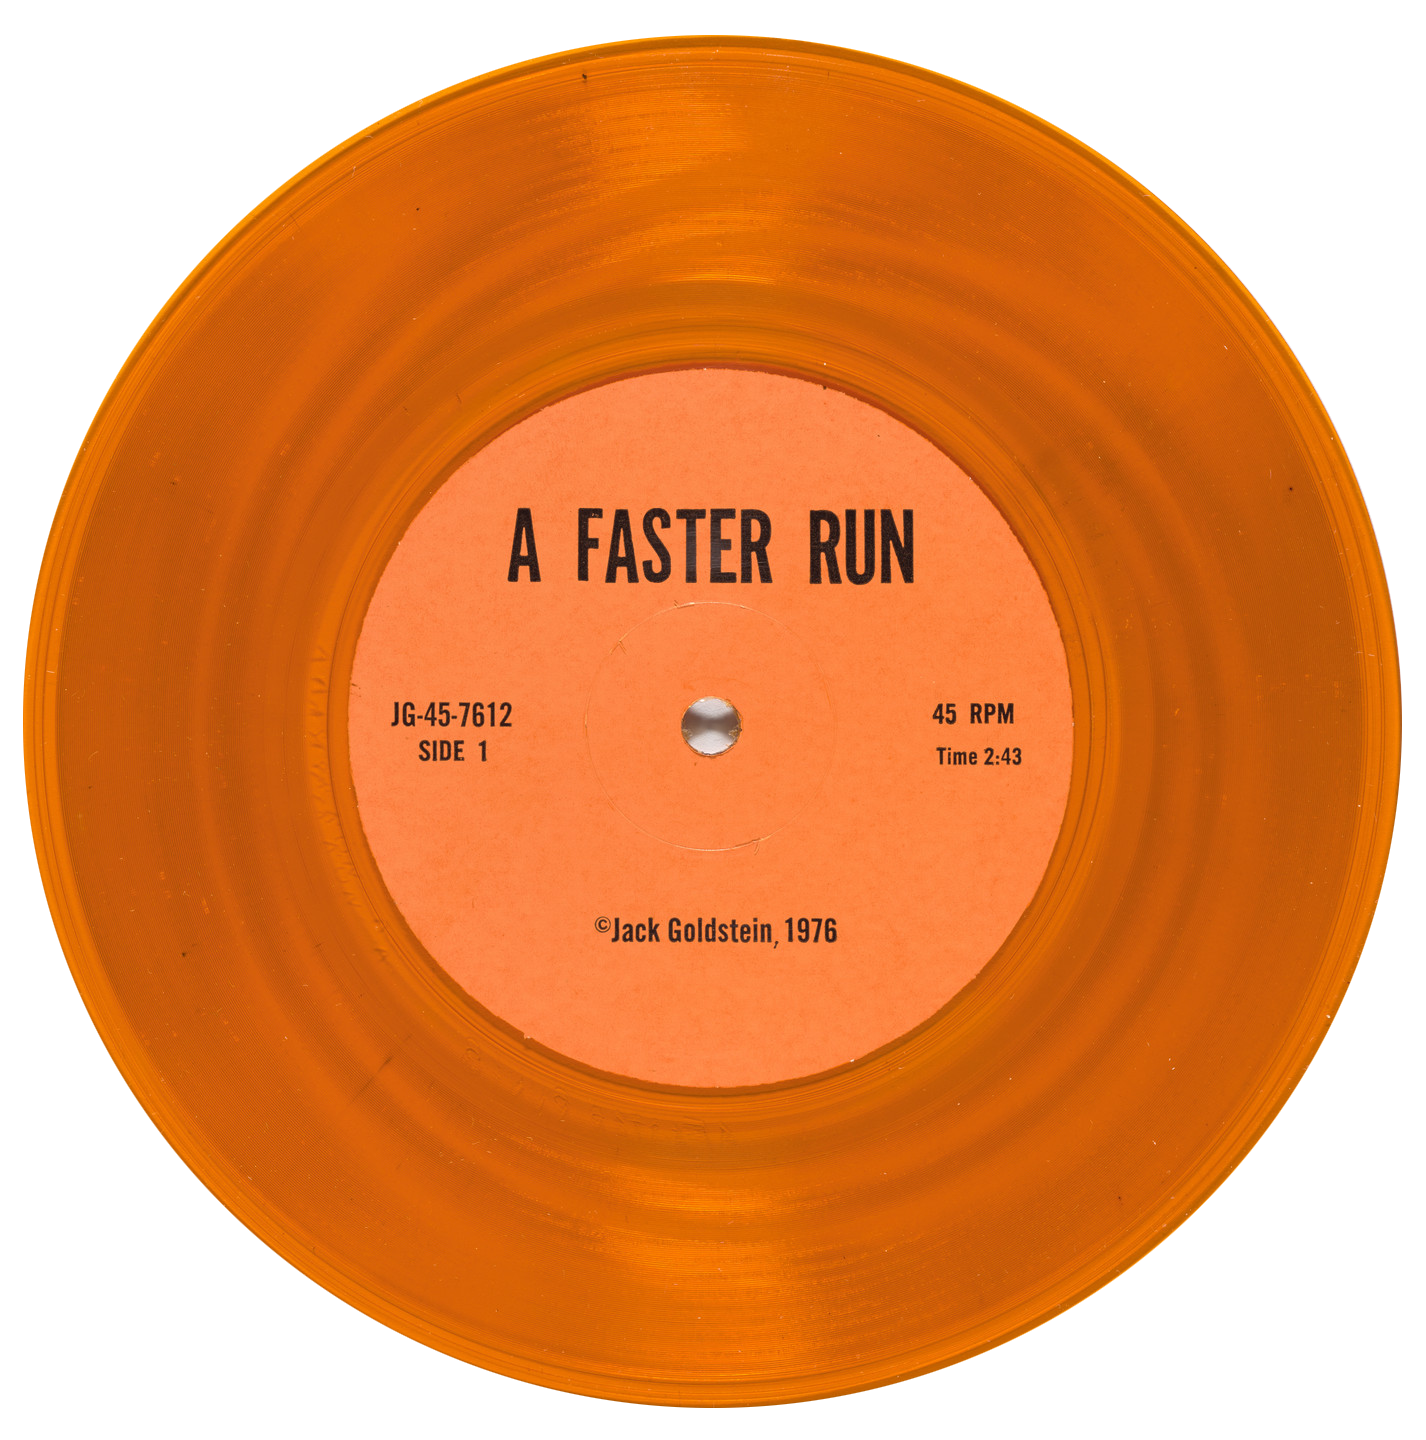  A FASTER RUN
Orange vinyl - 45 rpm 7-inch record

A Faster Run est un des neuf éléments constitutifs de :
A Suite of Nine 45 rpm 7-Inch Records with Sound Effects
1976